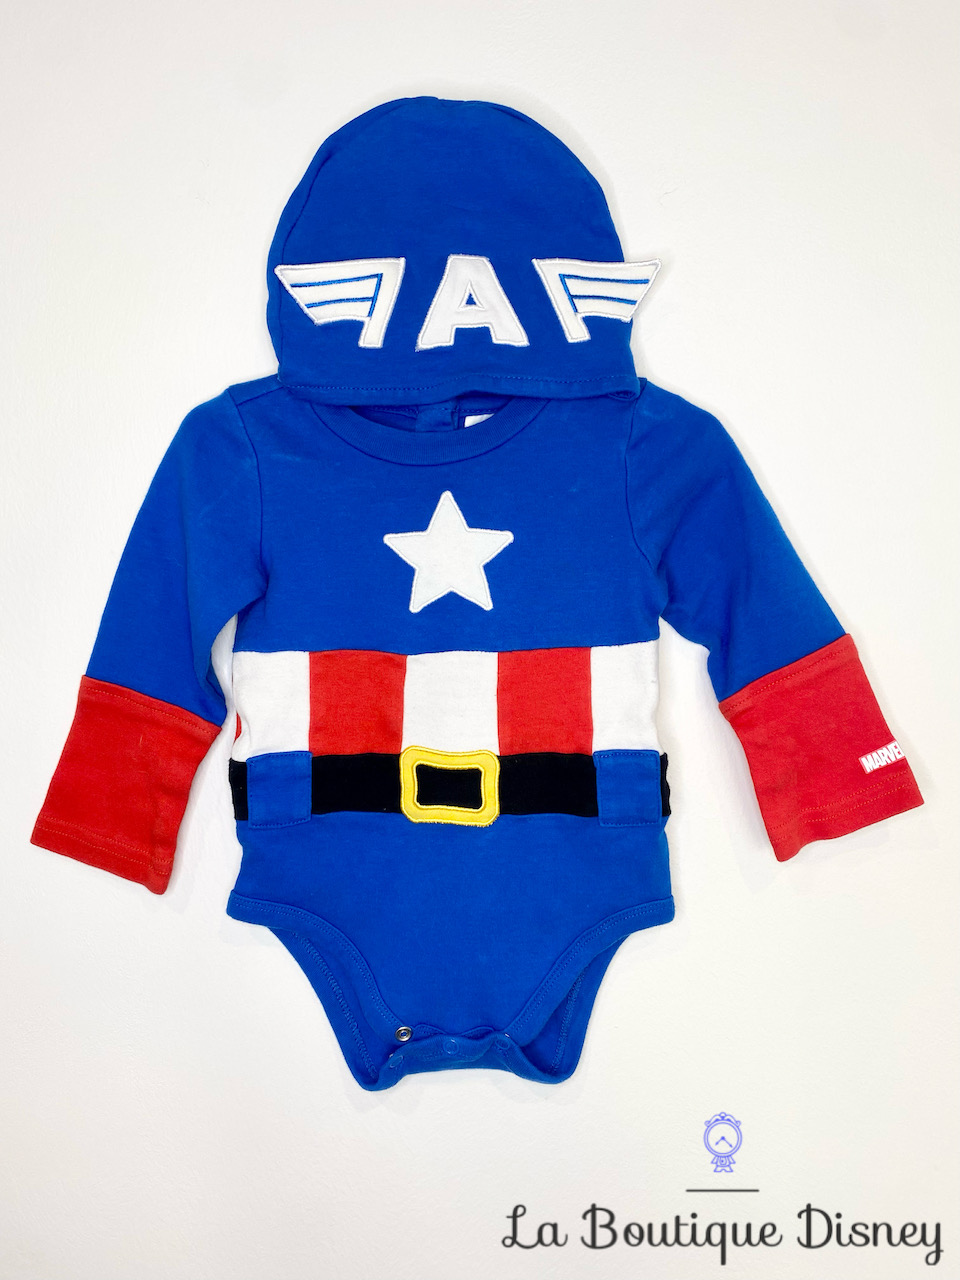 déguisement-body-captain-america-disney-baby-by-disney-store-taille-12-18-mois-marvel-avengers-super-héros-11